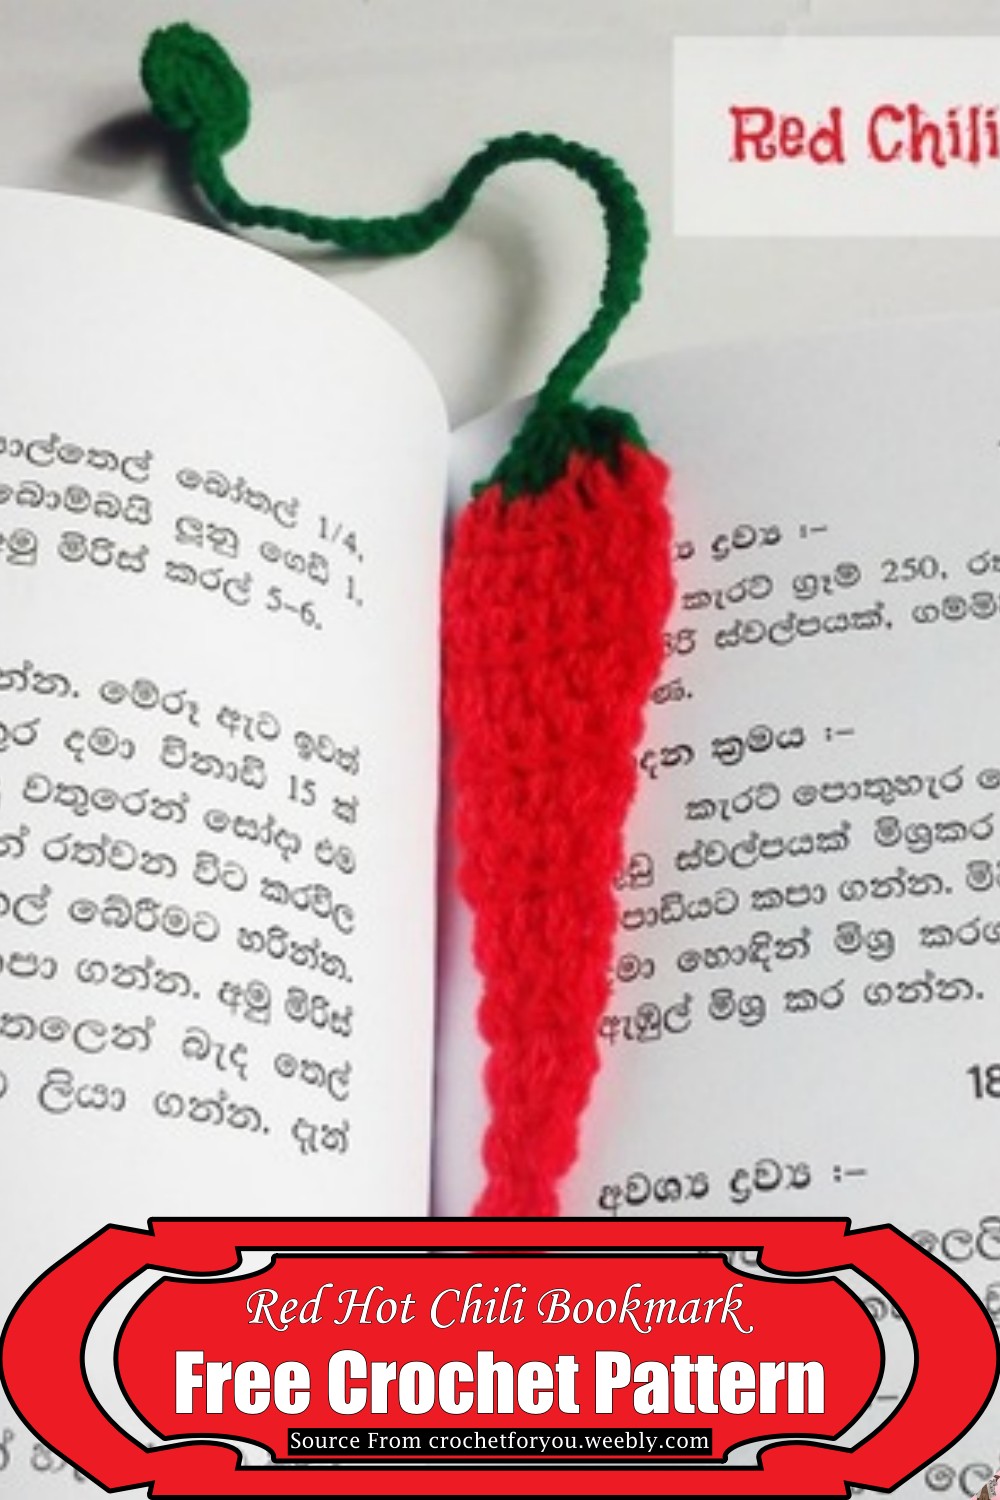  Crochet Red Hot Chili Bookmark Pattern